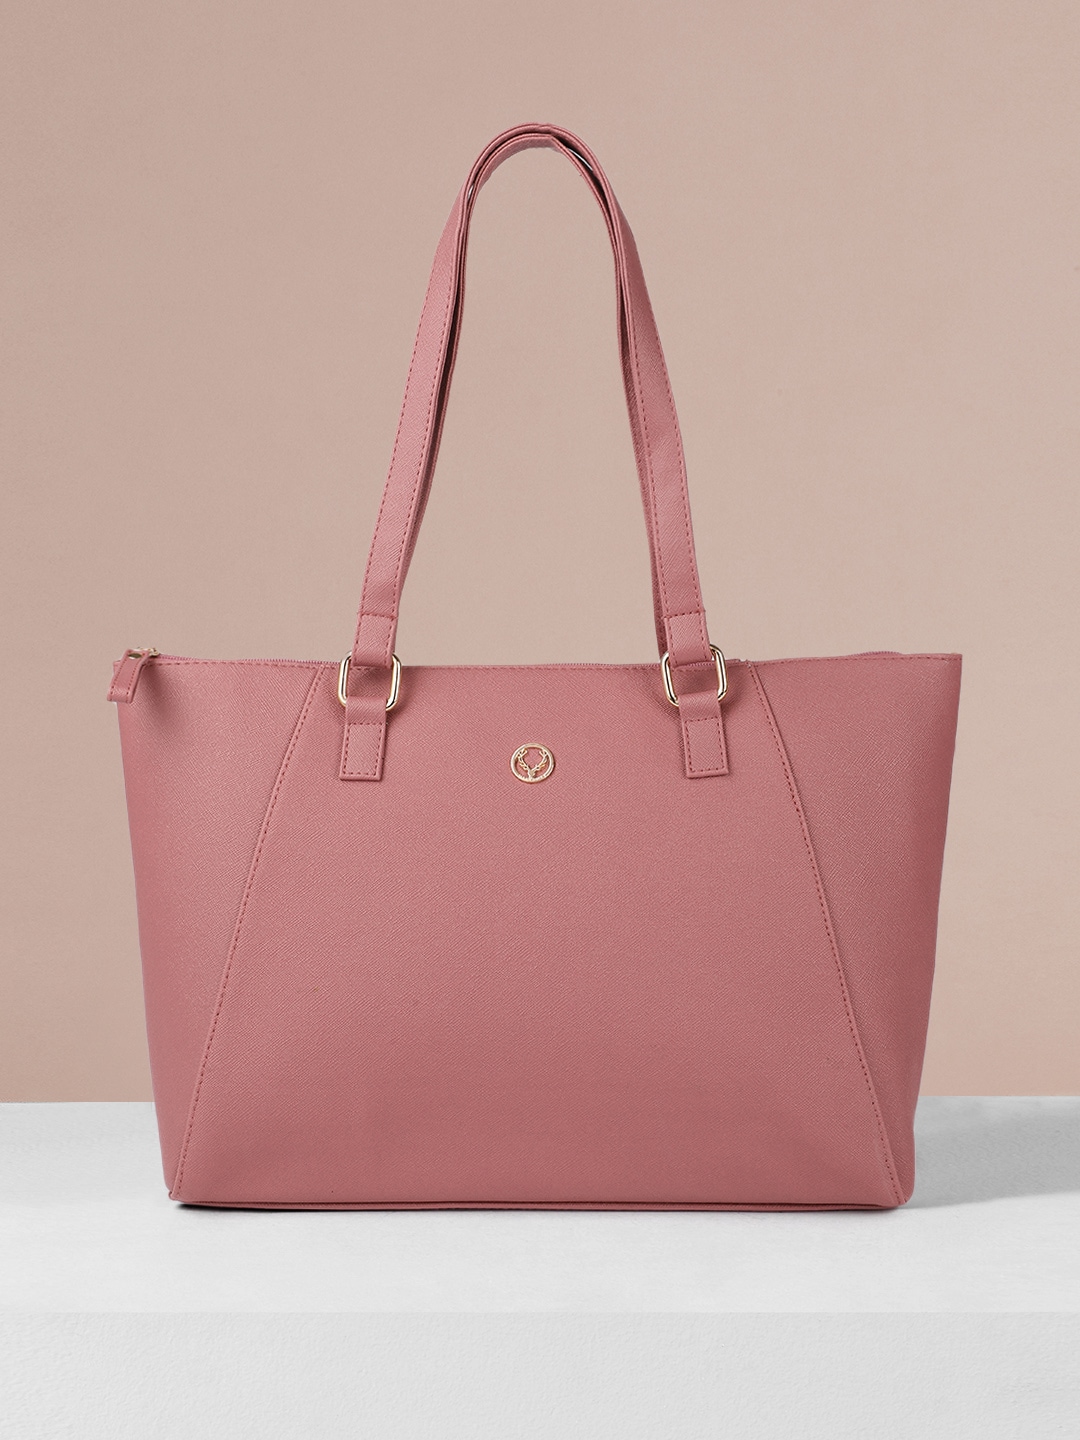 Allen Solly Pink Textured Structured Shoulder Bag Price in India